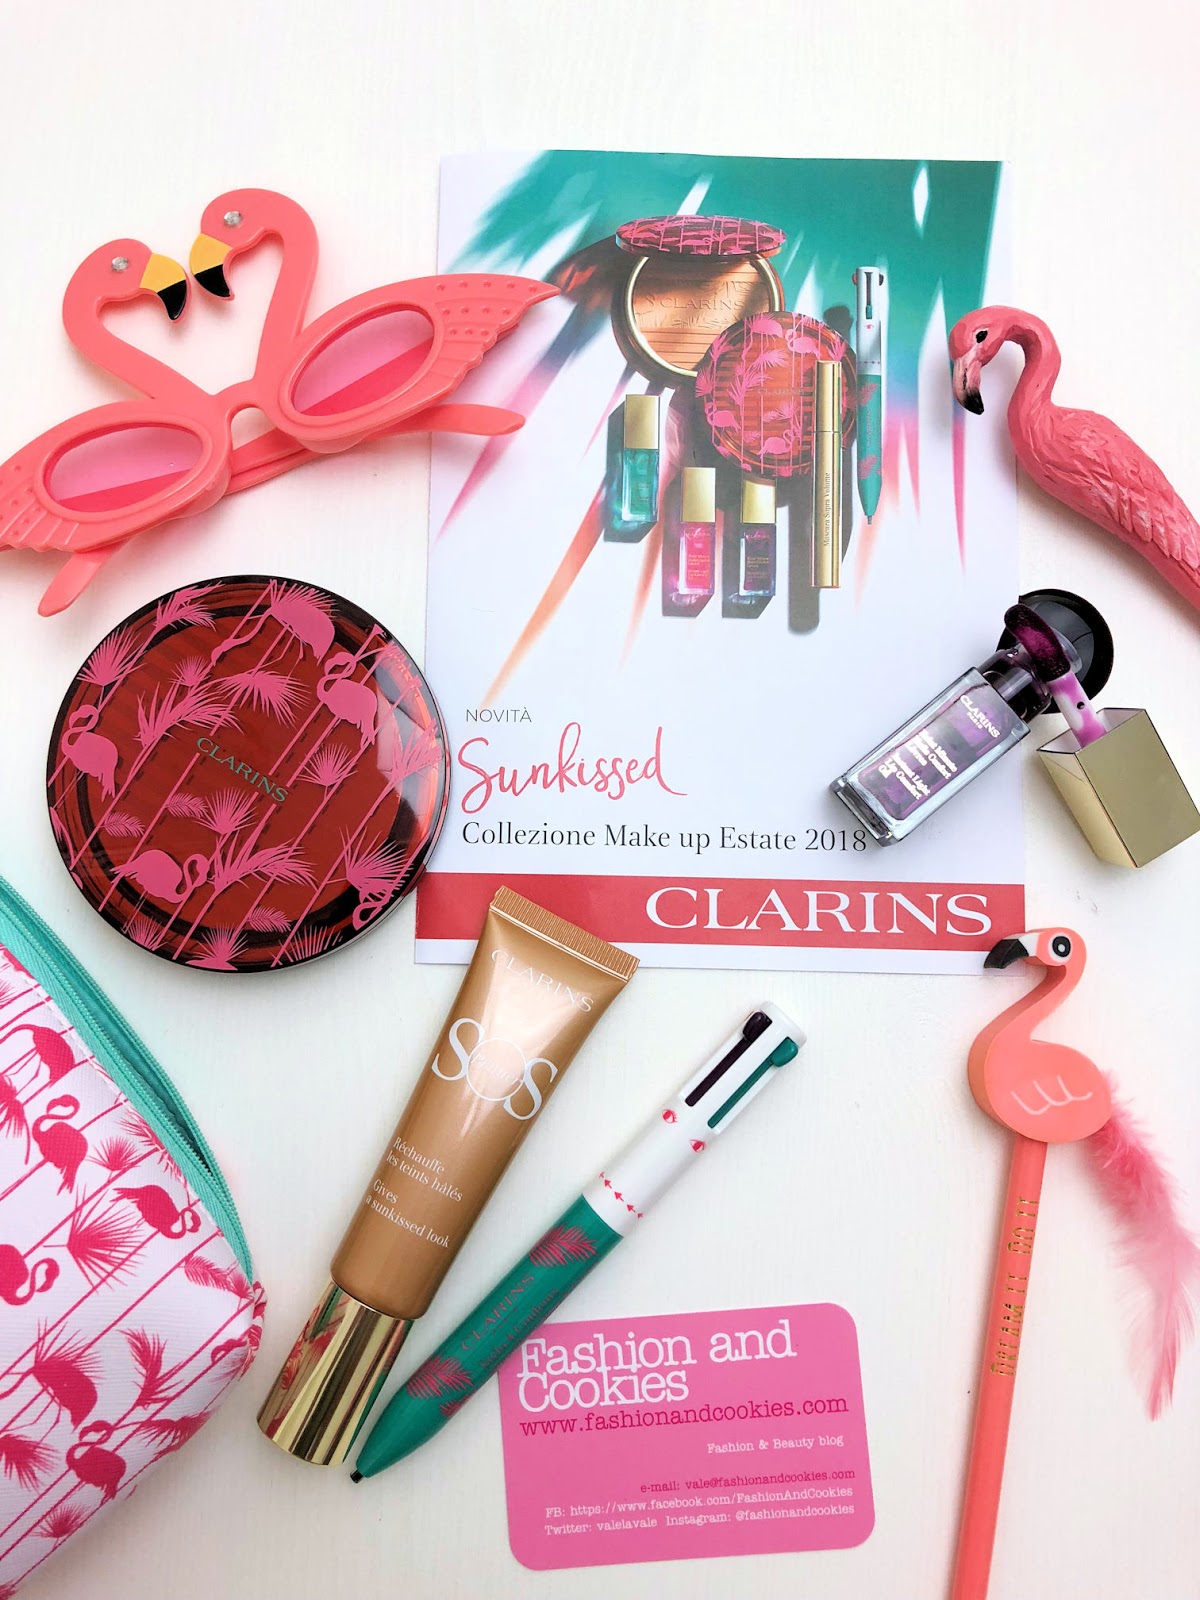 Clarins collezione makeup Estate 2018: Sunkissed su Fashion and Cookies fashion blog, fashion blogger style